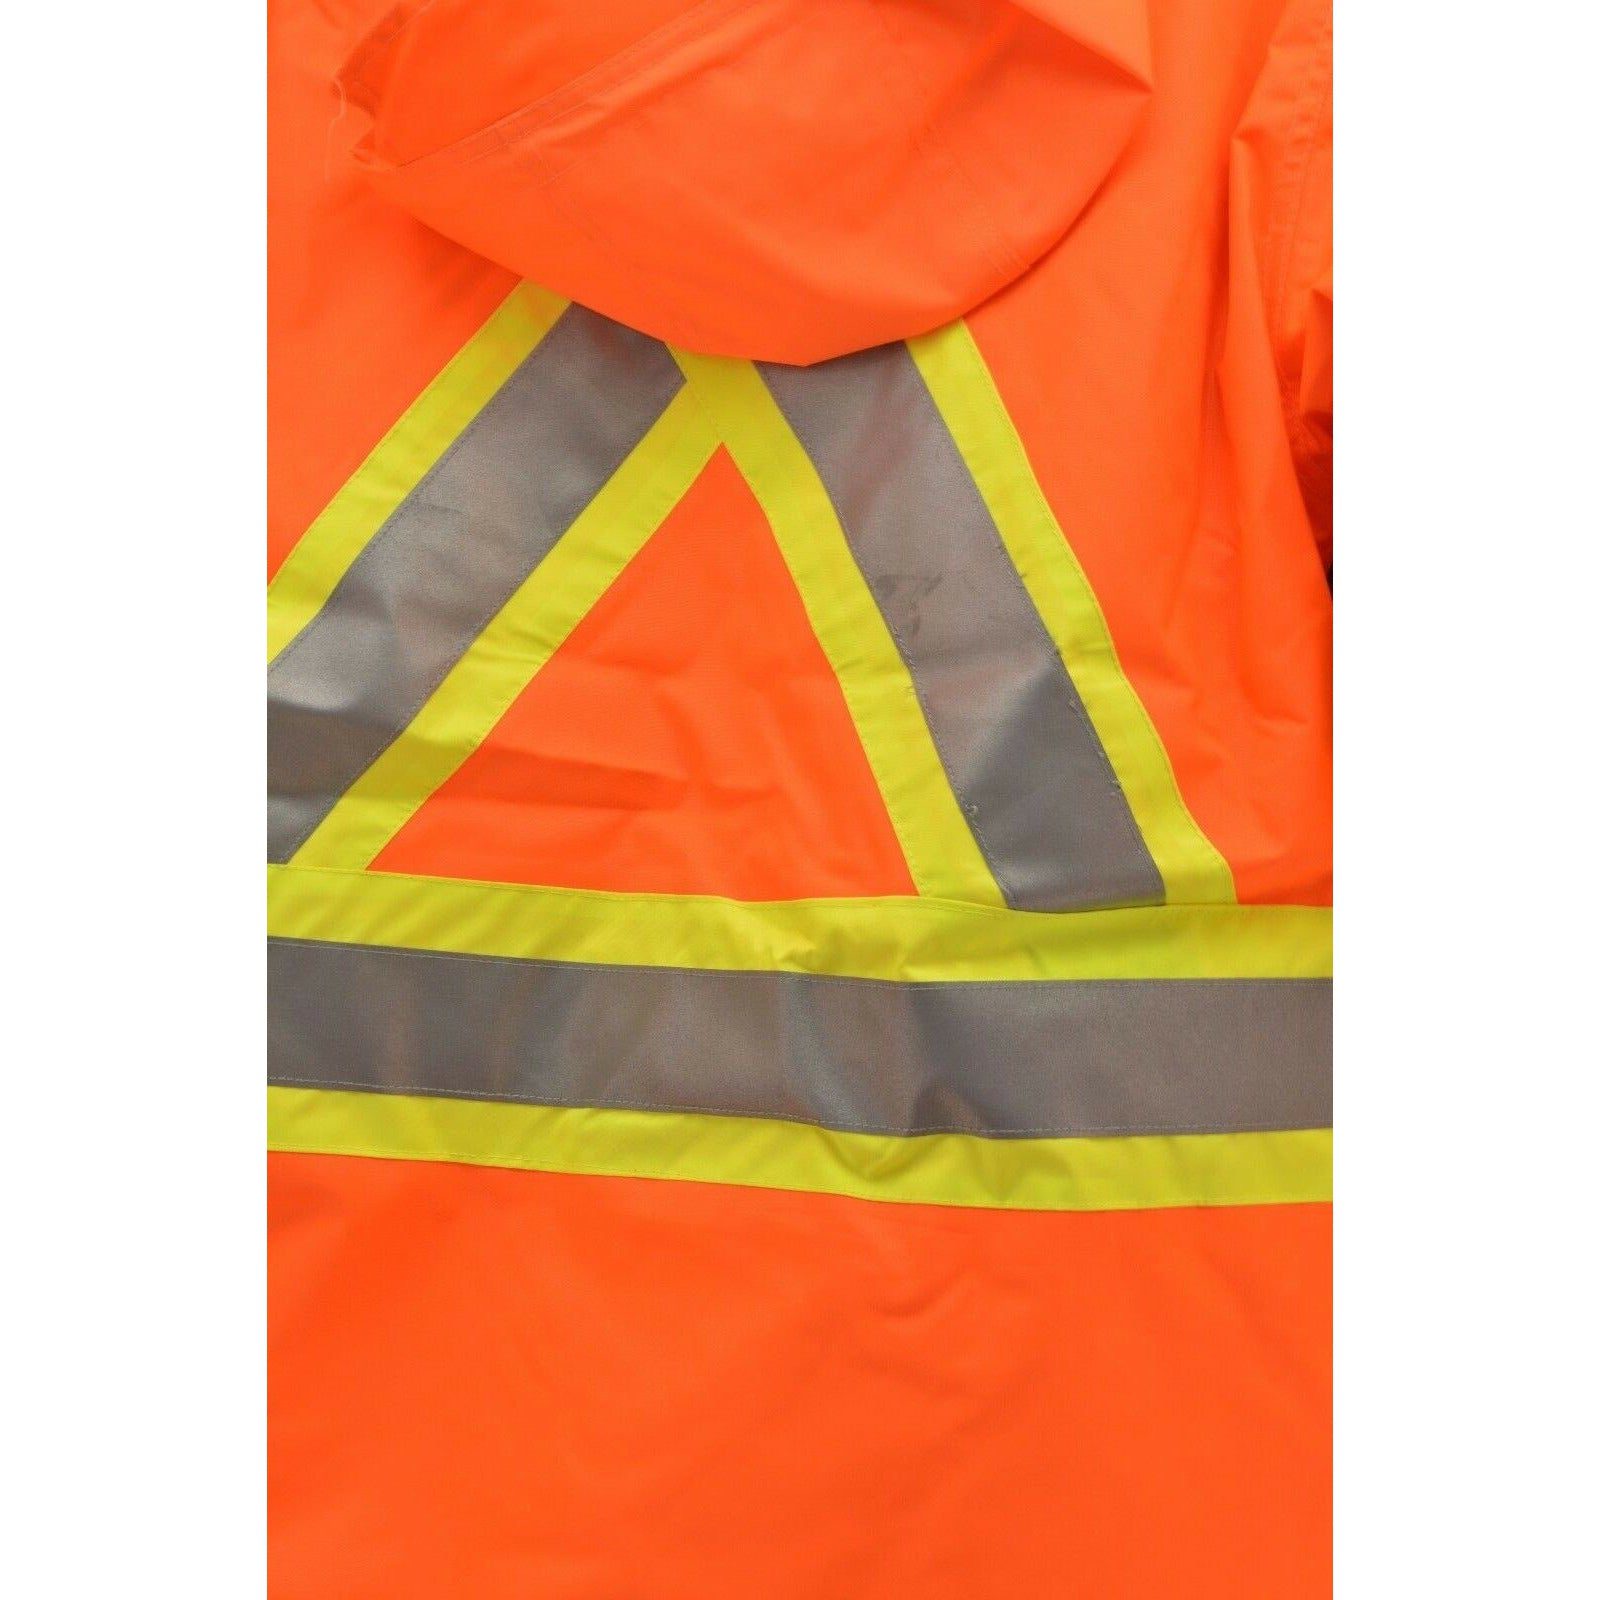 Condor men's 3-in-1 flagmans Safety jacket with removable fleece lining in size medium in high viz orange